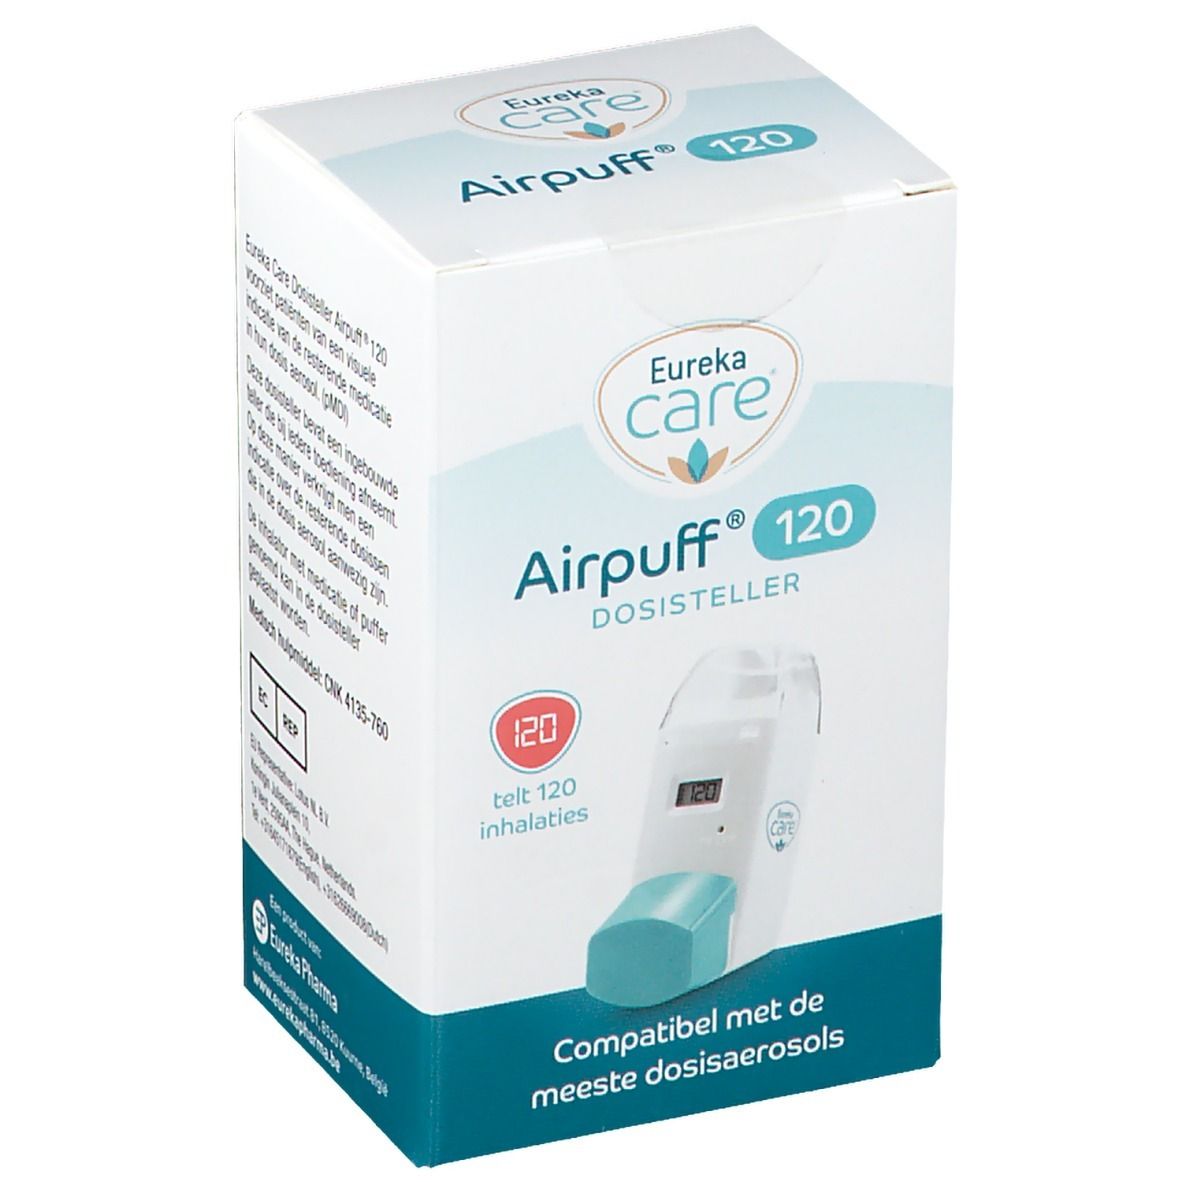 Eureka Care® Airpuff 120 - Dosisteller